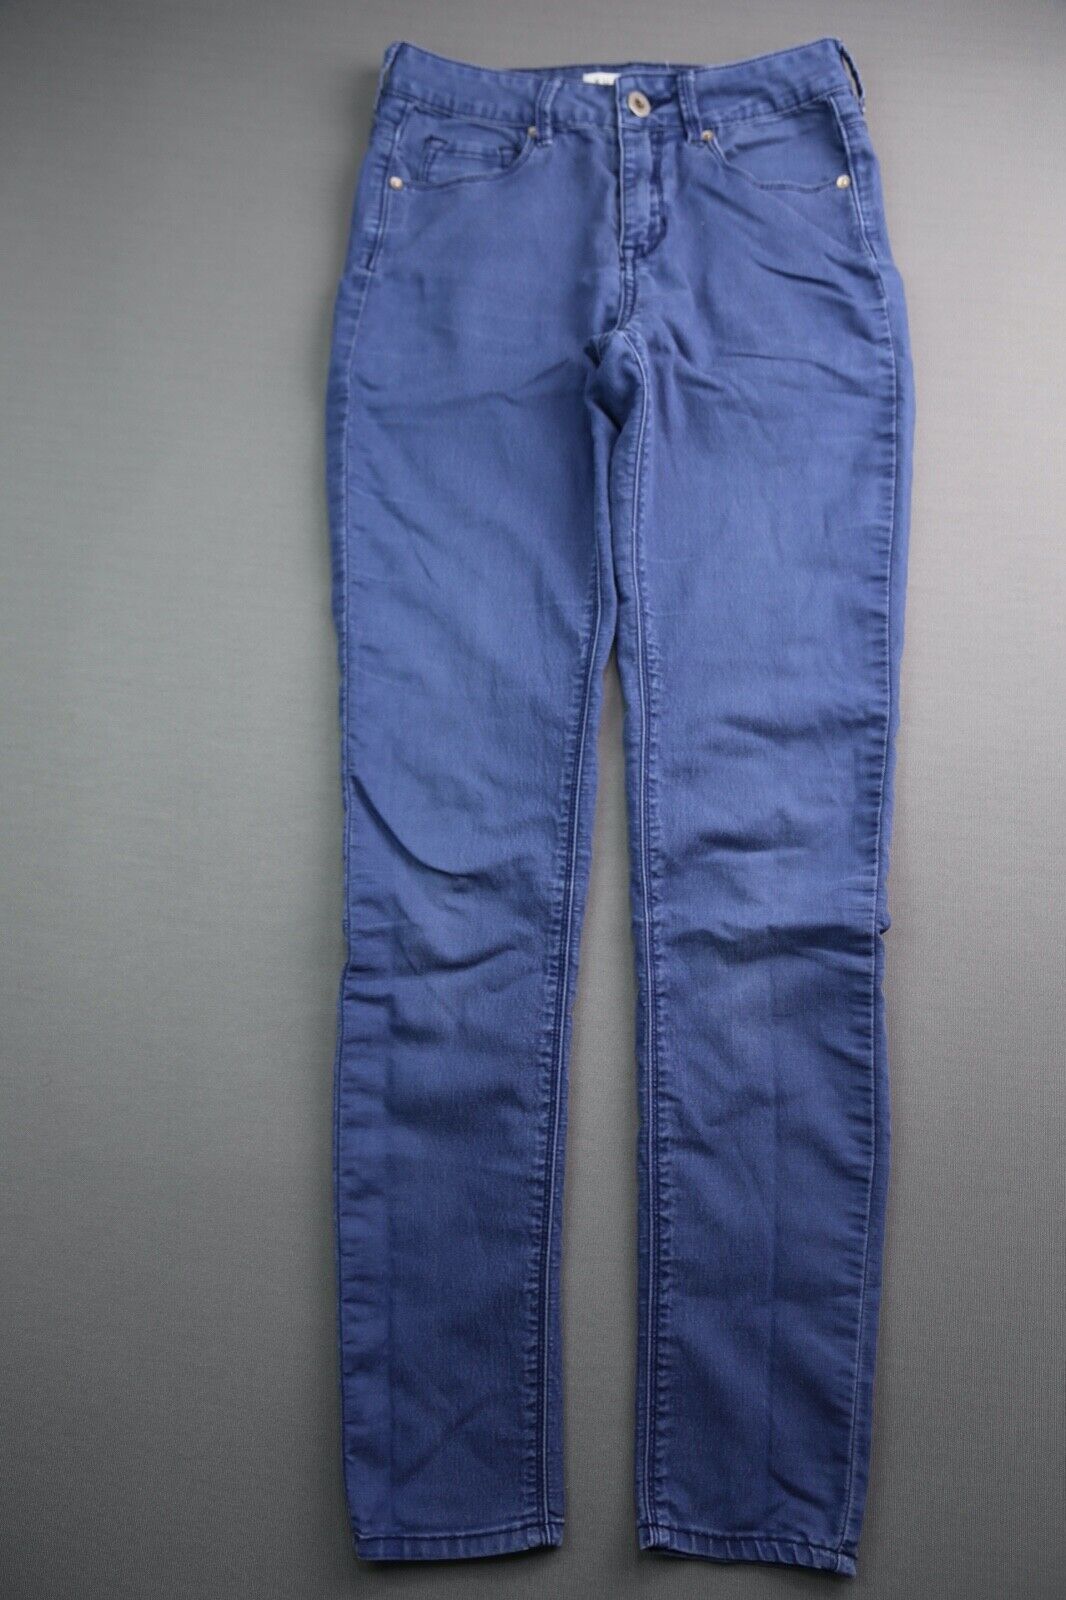 Women\'s Bullhead Denim Jeans High Rise Skinniest Size 5 (25x28)  Zipper Fly 